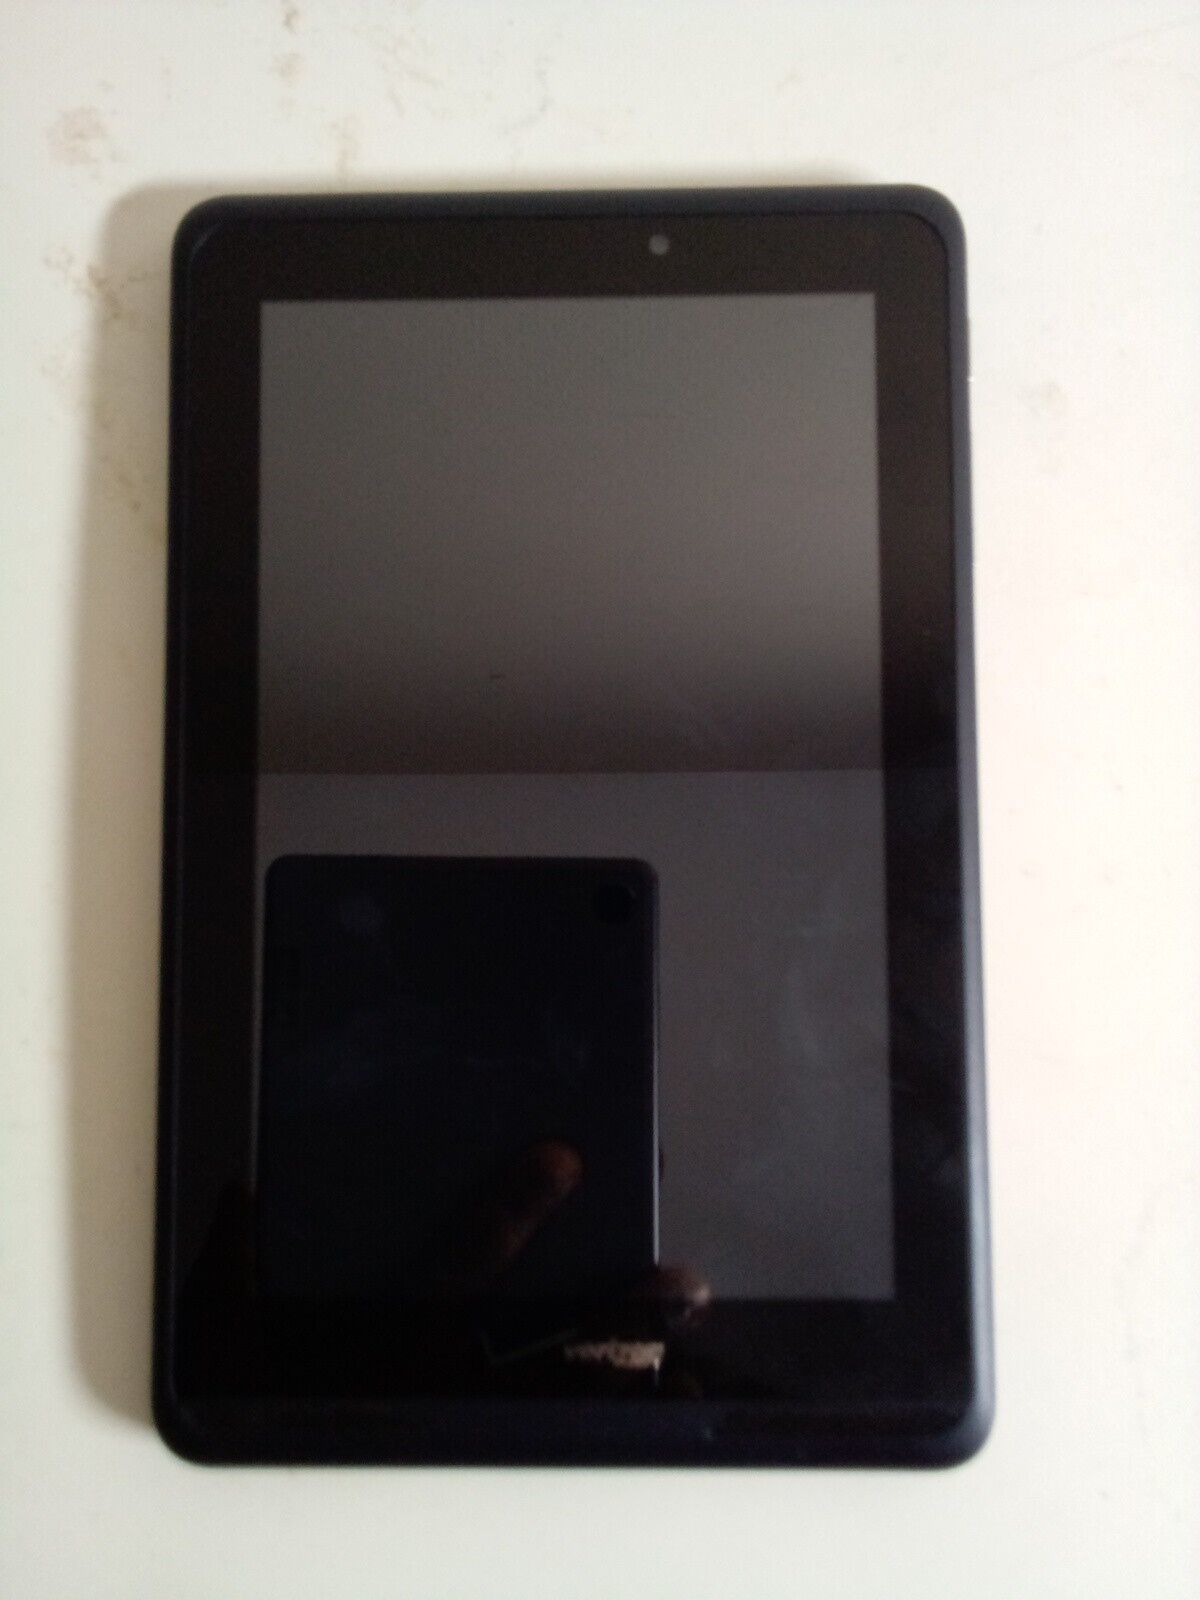 Archos Internet Tablet 5 16GB, Wi-Fi, 4.8in - Black for sale online